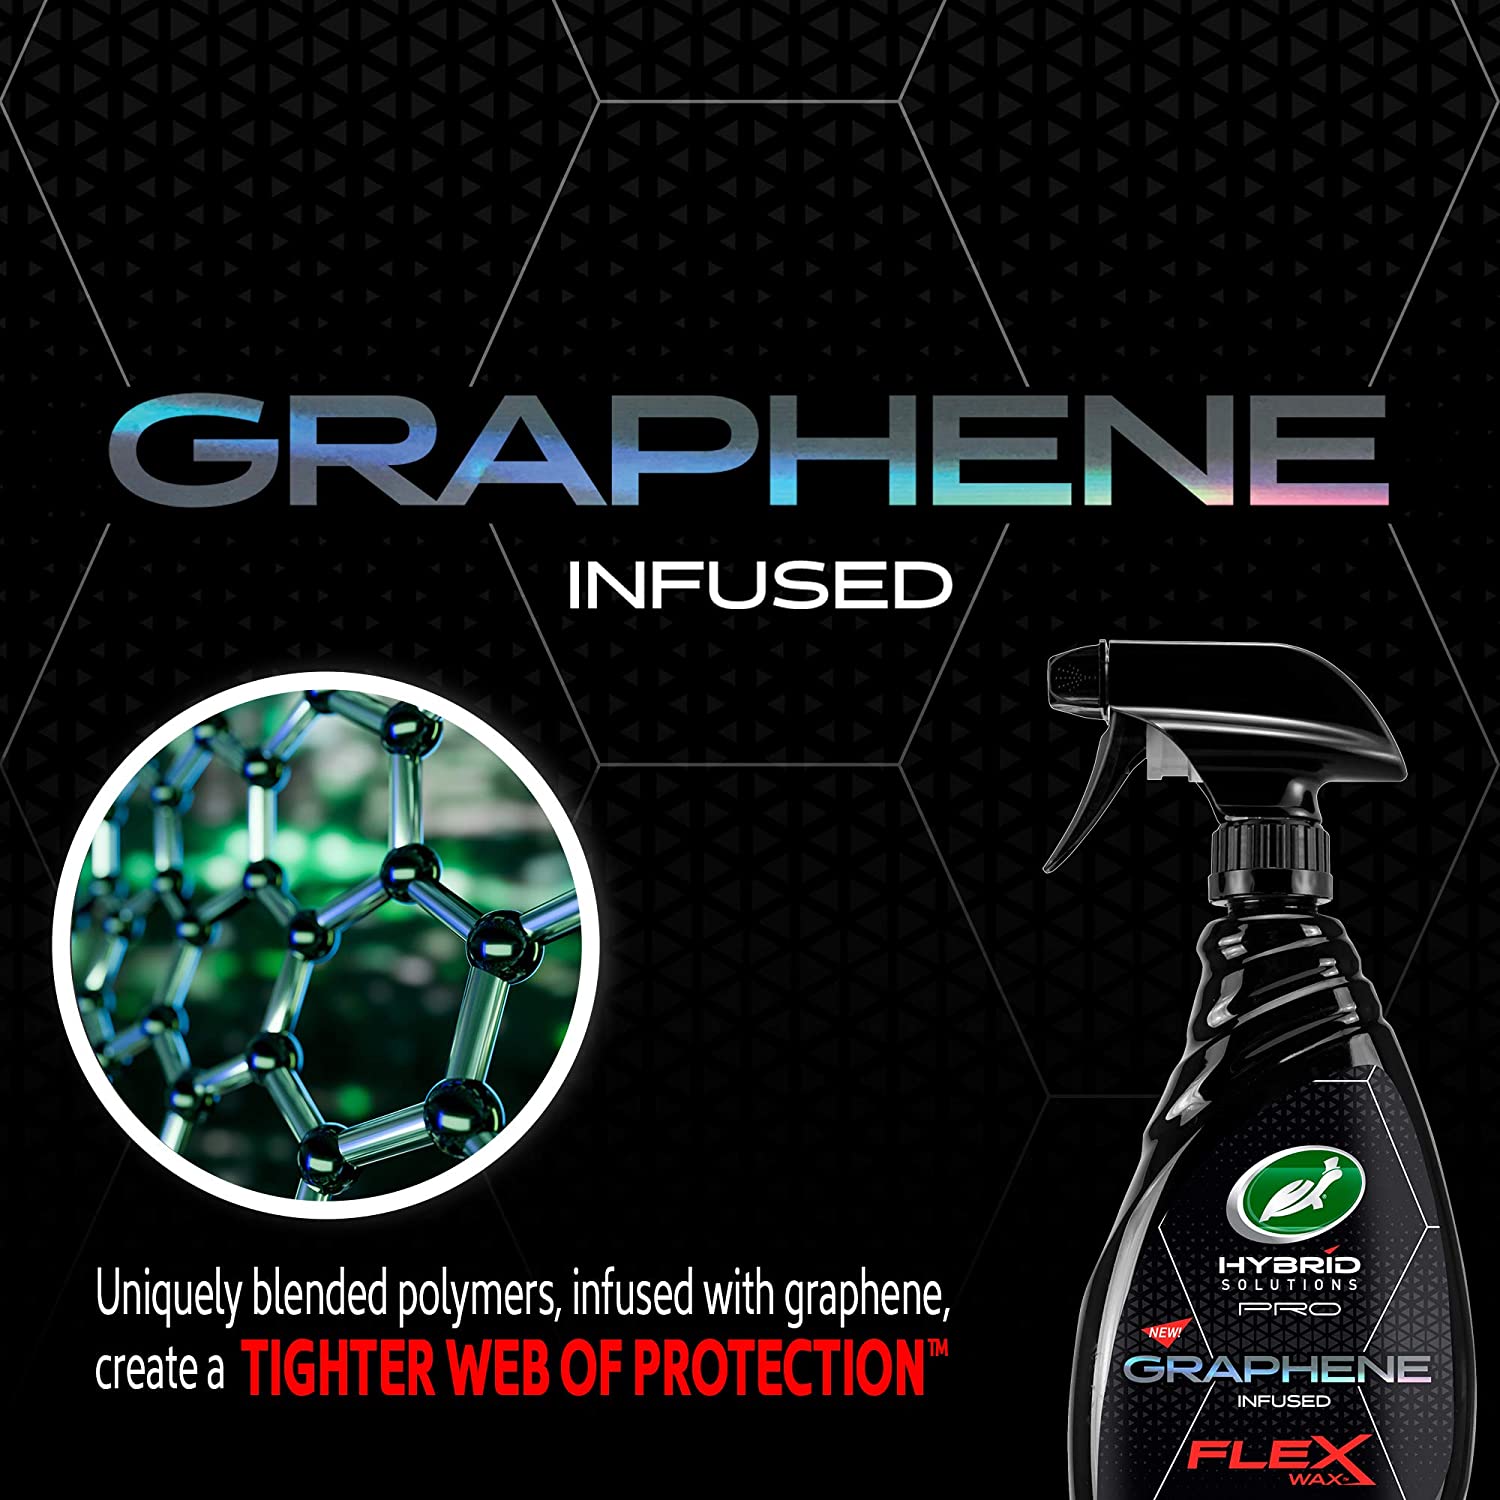 Turtle Wax Hybrid Solutions PRO Flex Wax Graphene Infused